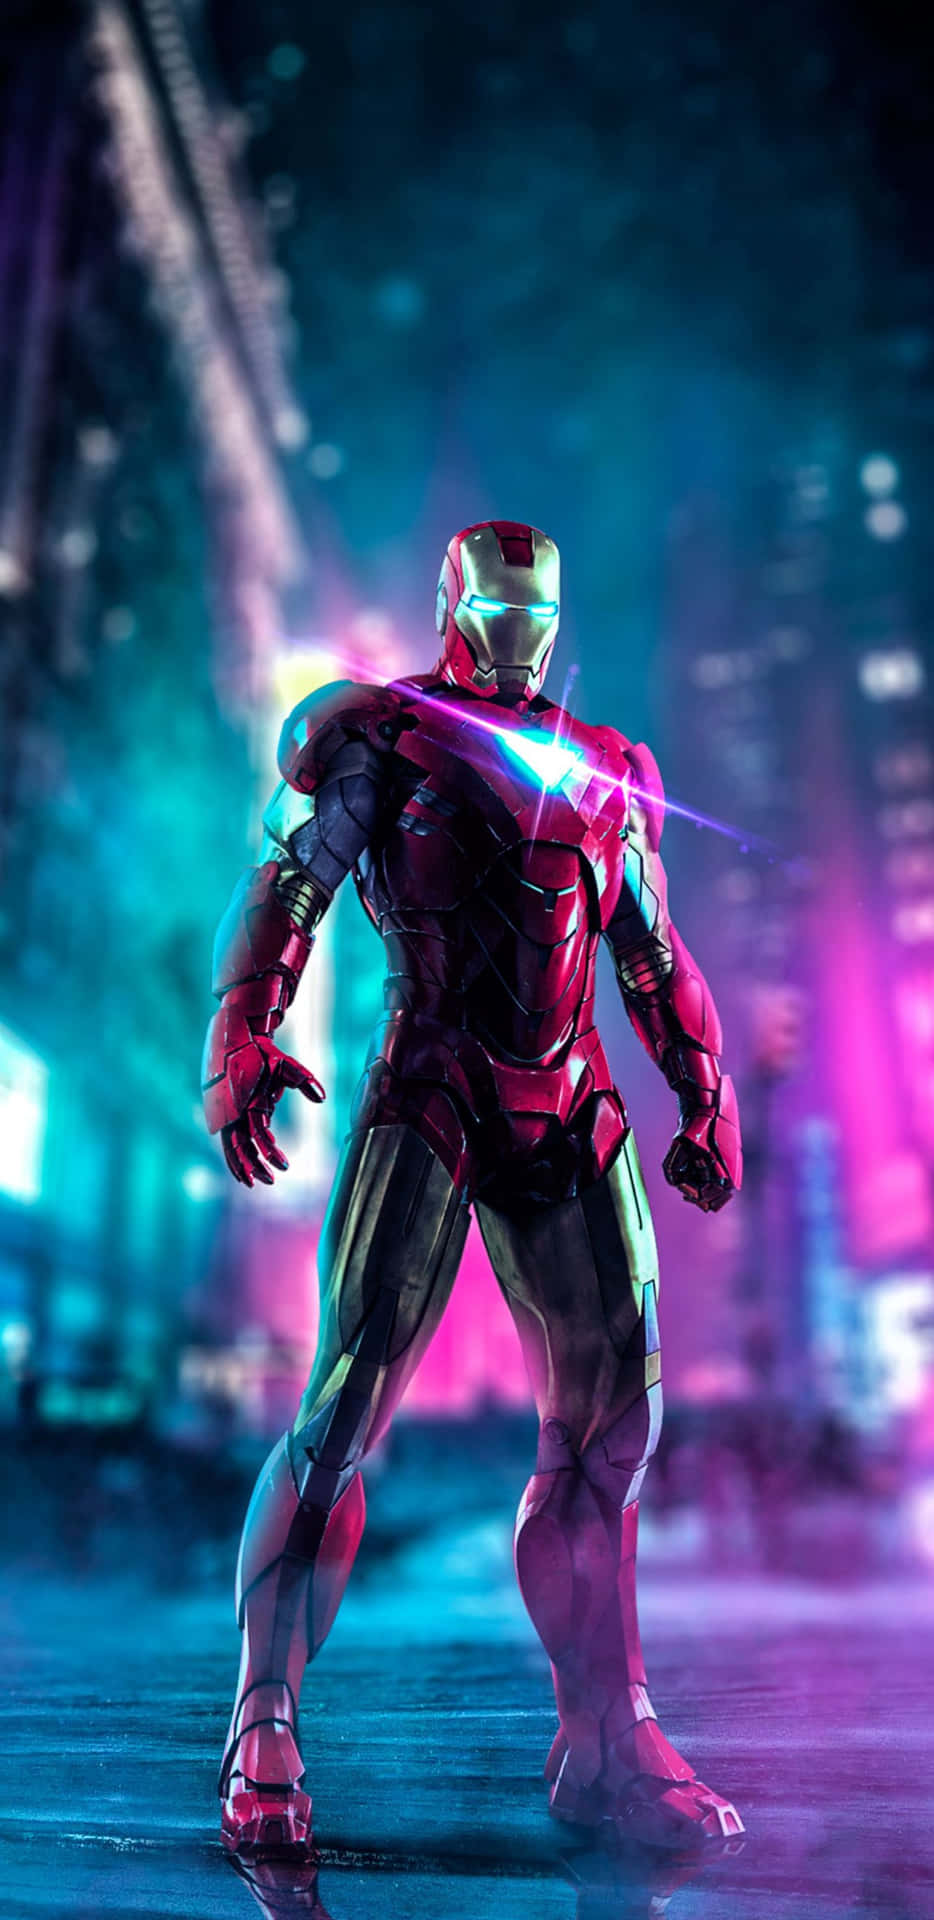 Pixel3xl Iron Man Blå Rosa Neon Bakgrund.